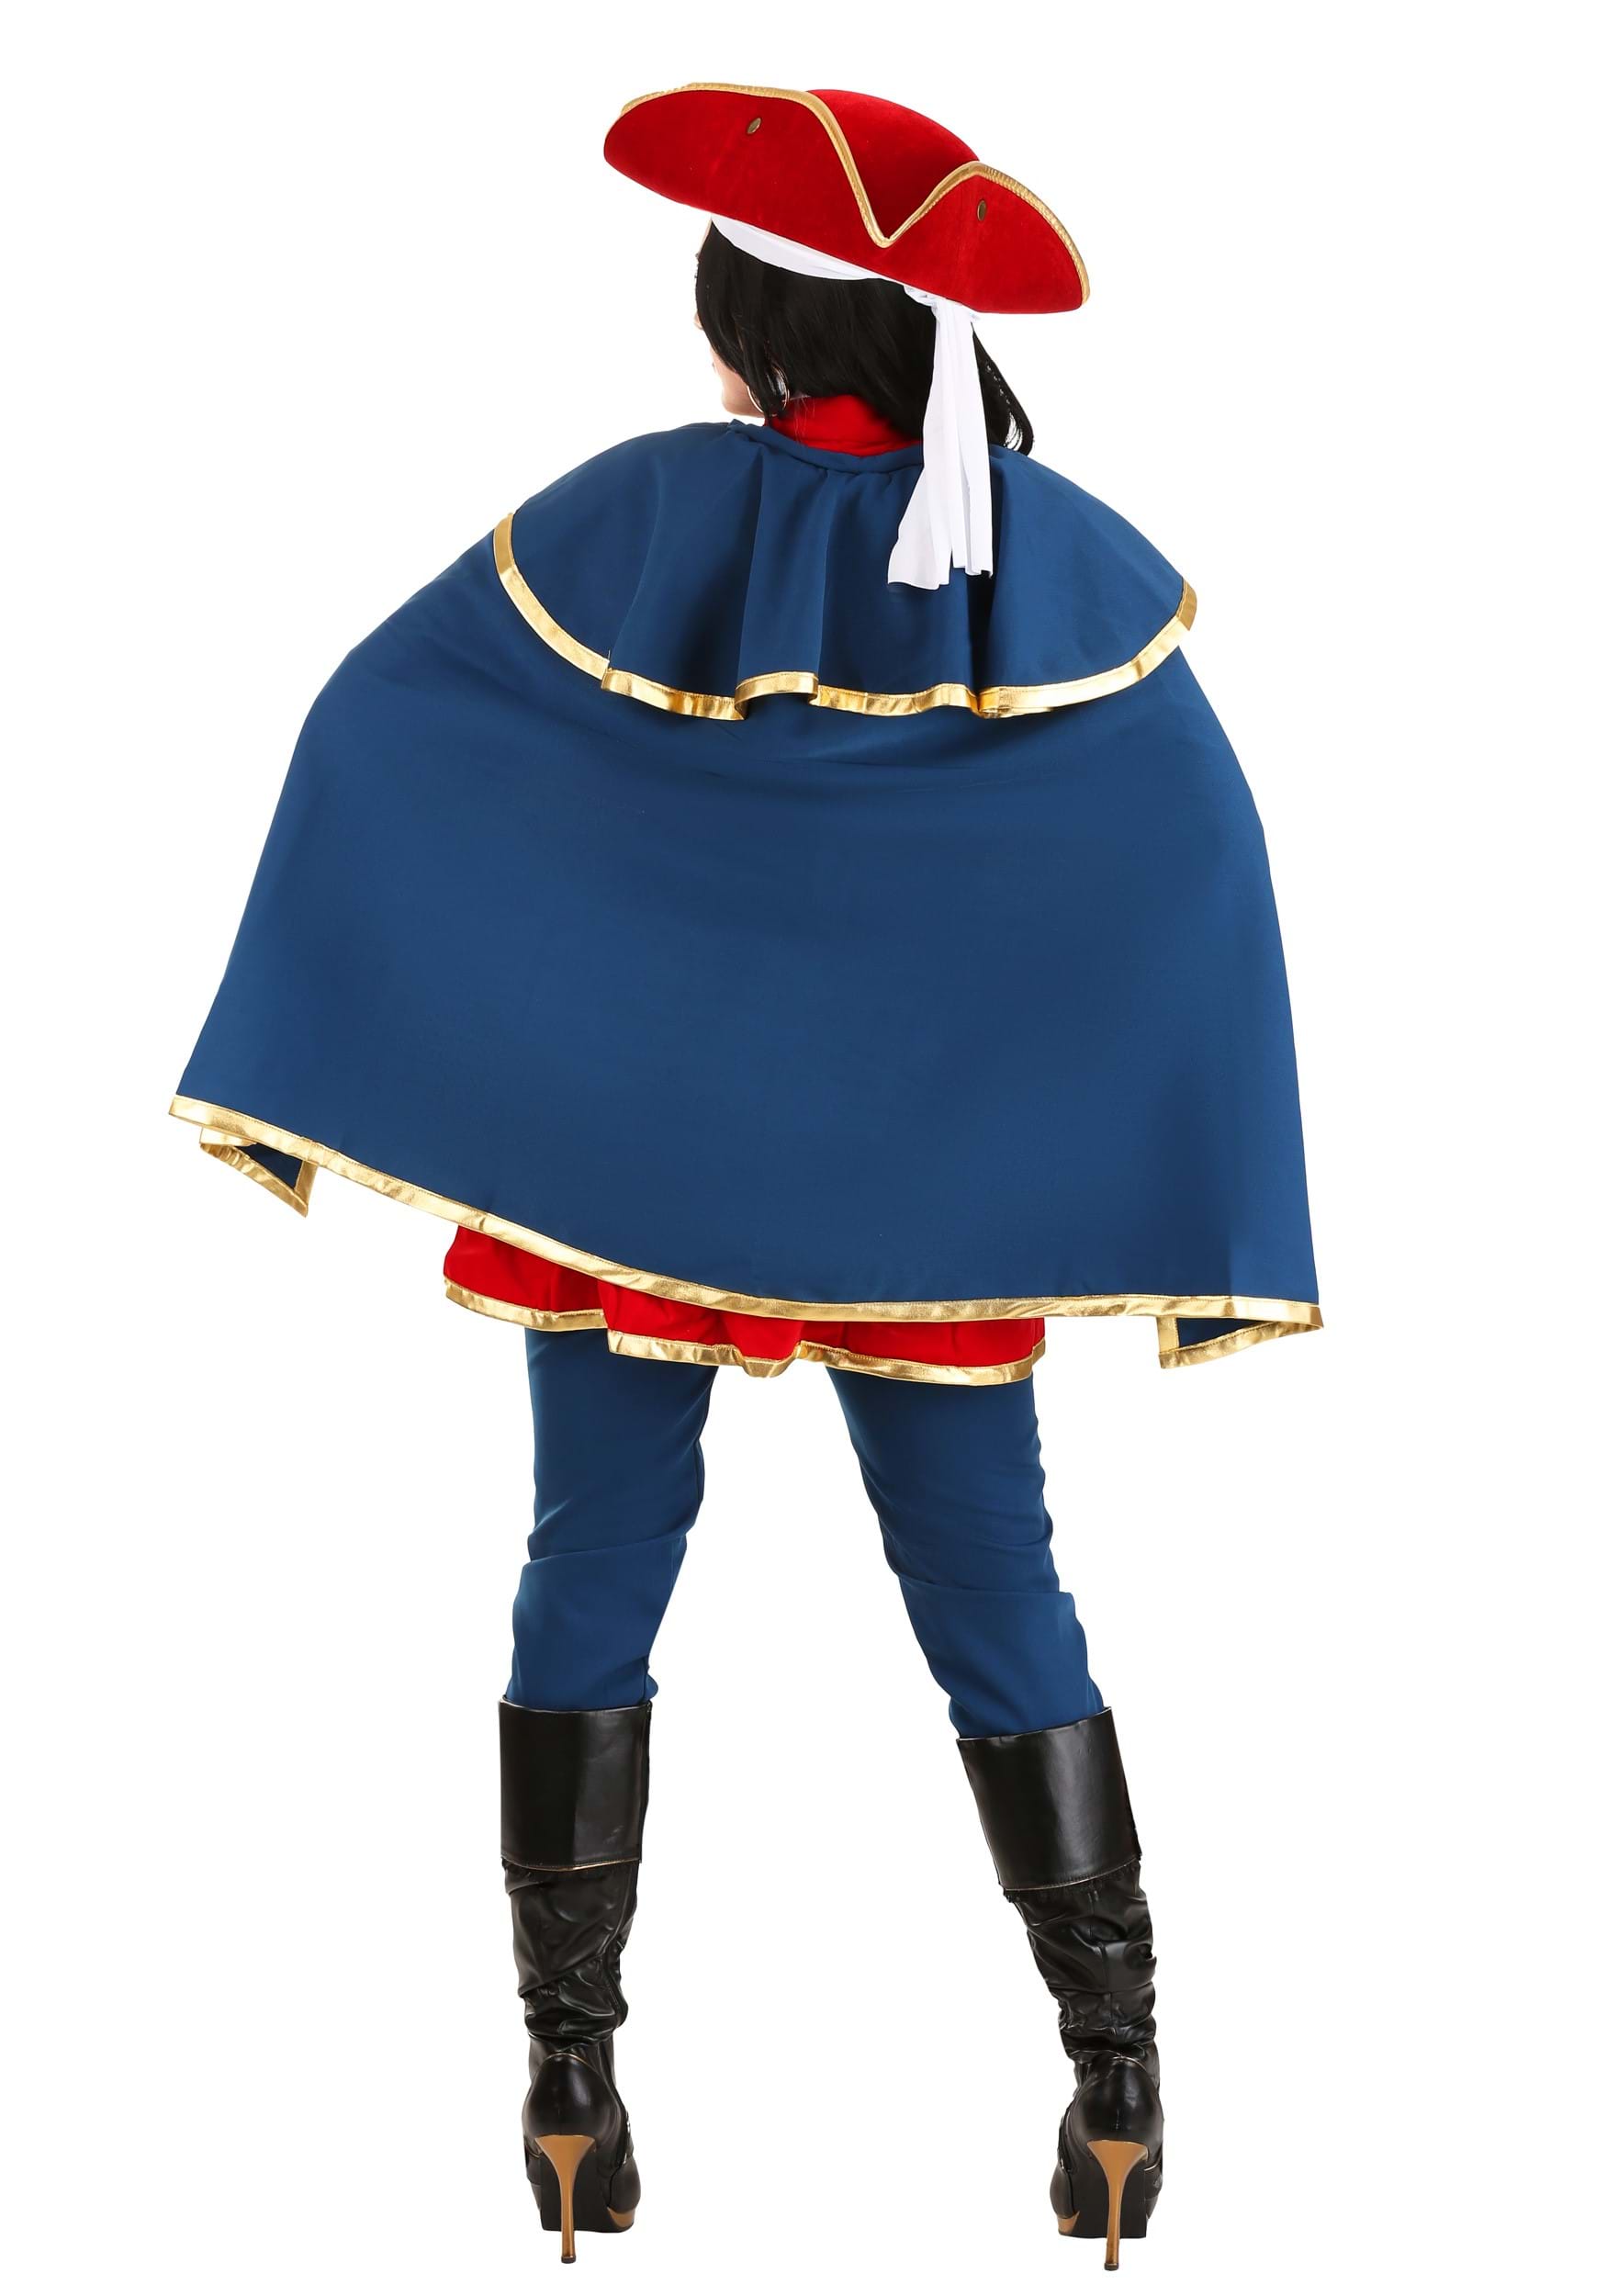 Captain Pirate Costume For Women